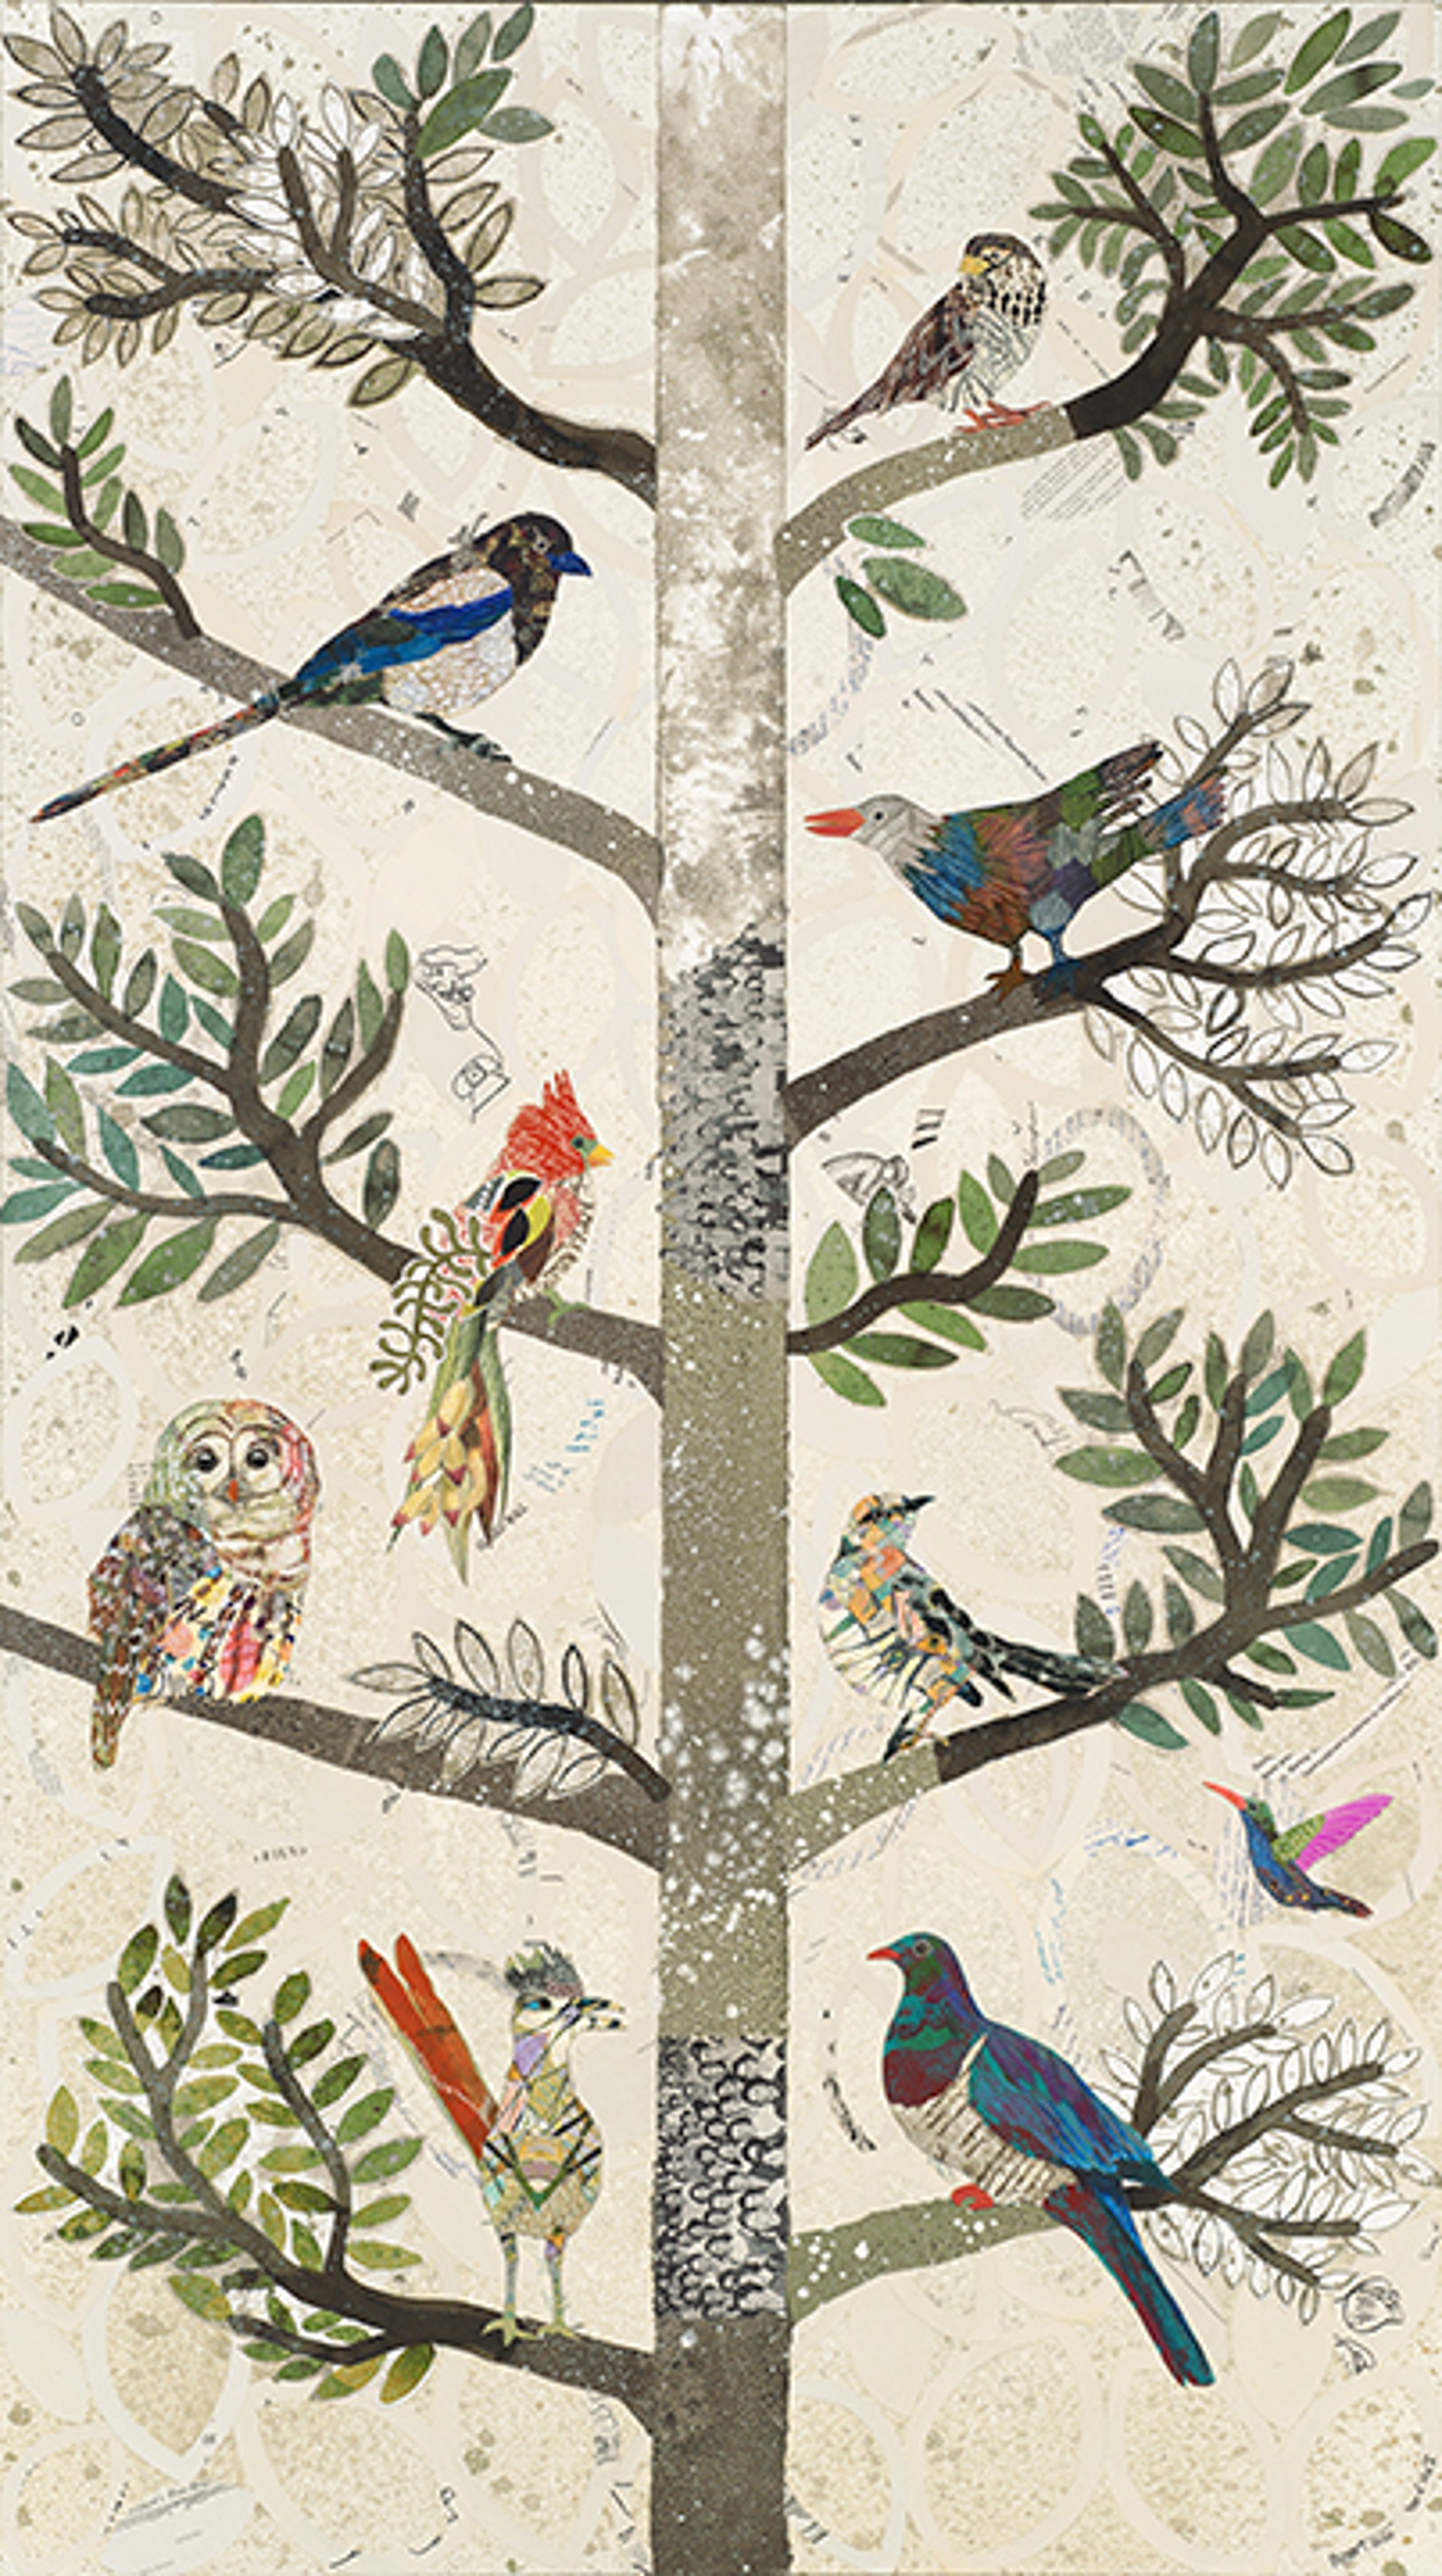 Tree of Life 5 by Brenda Bogart - Prints